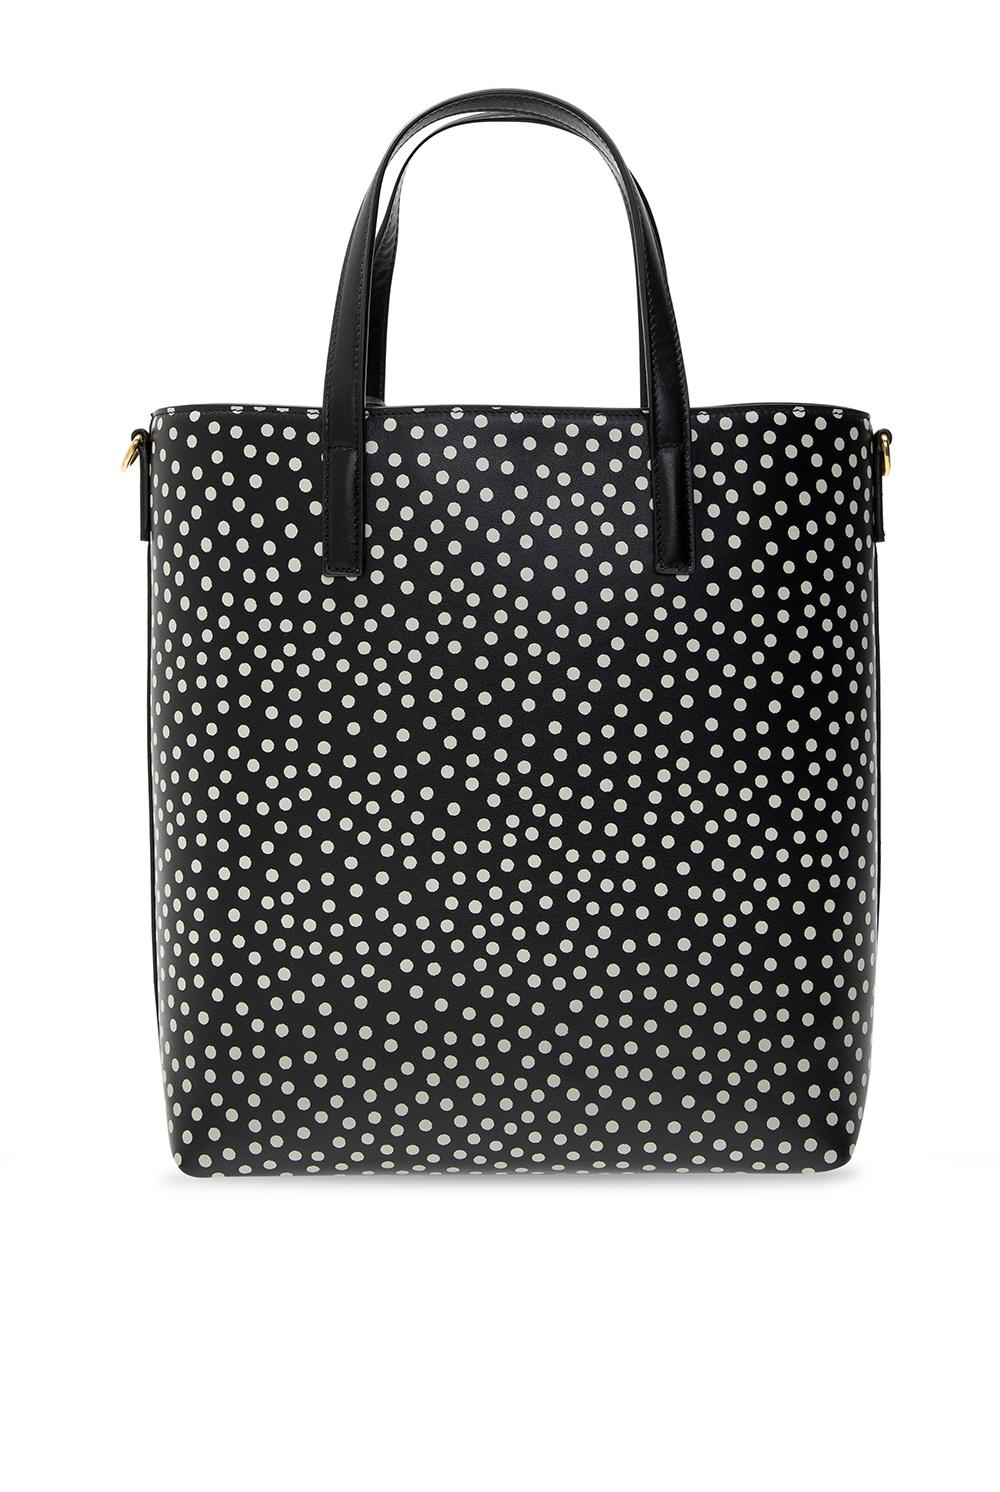 Saint Laurent Soft Leather Black Polka Dot Toy Shopping Bag For Sale 1